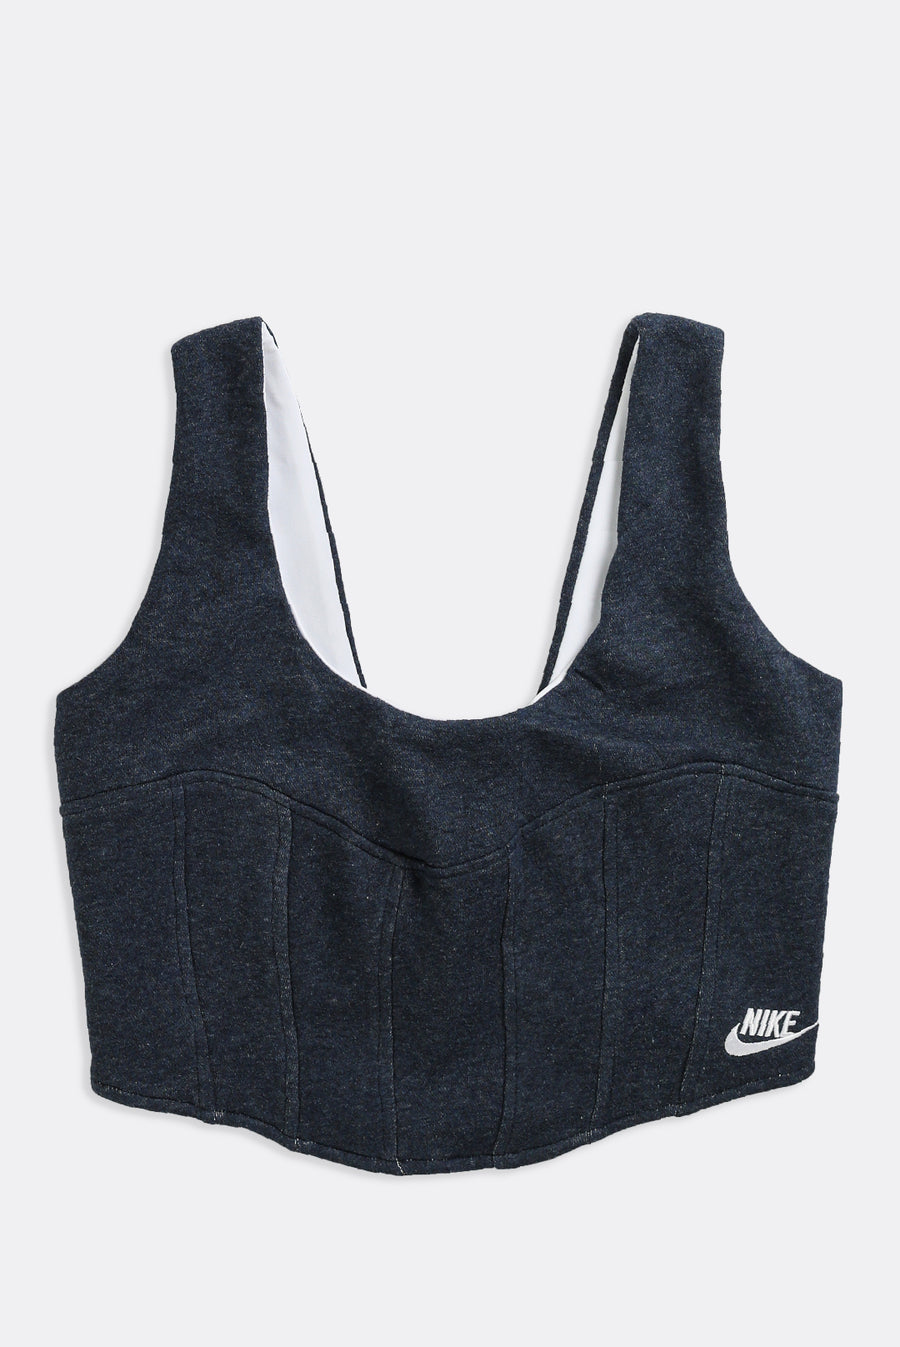 Rework Nike Sweatshirt Bustier - M